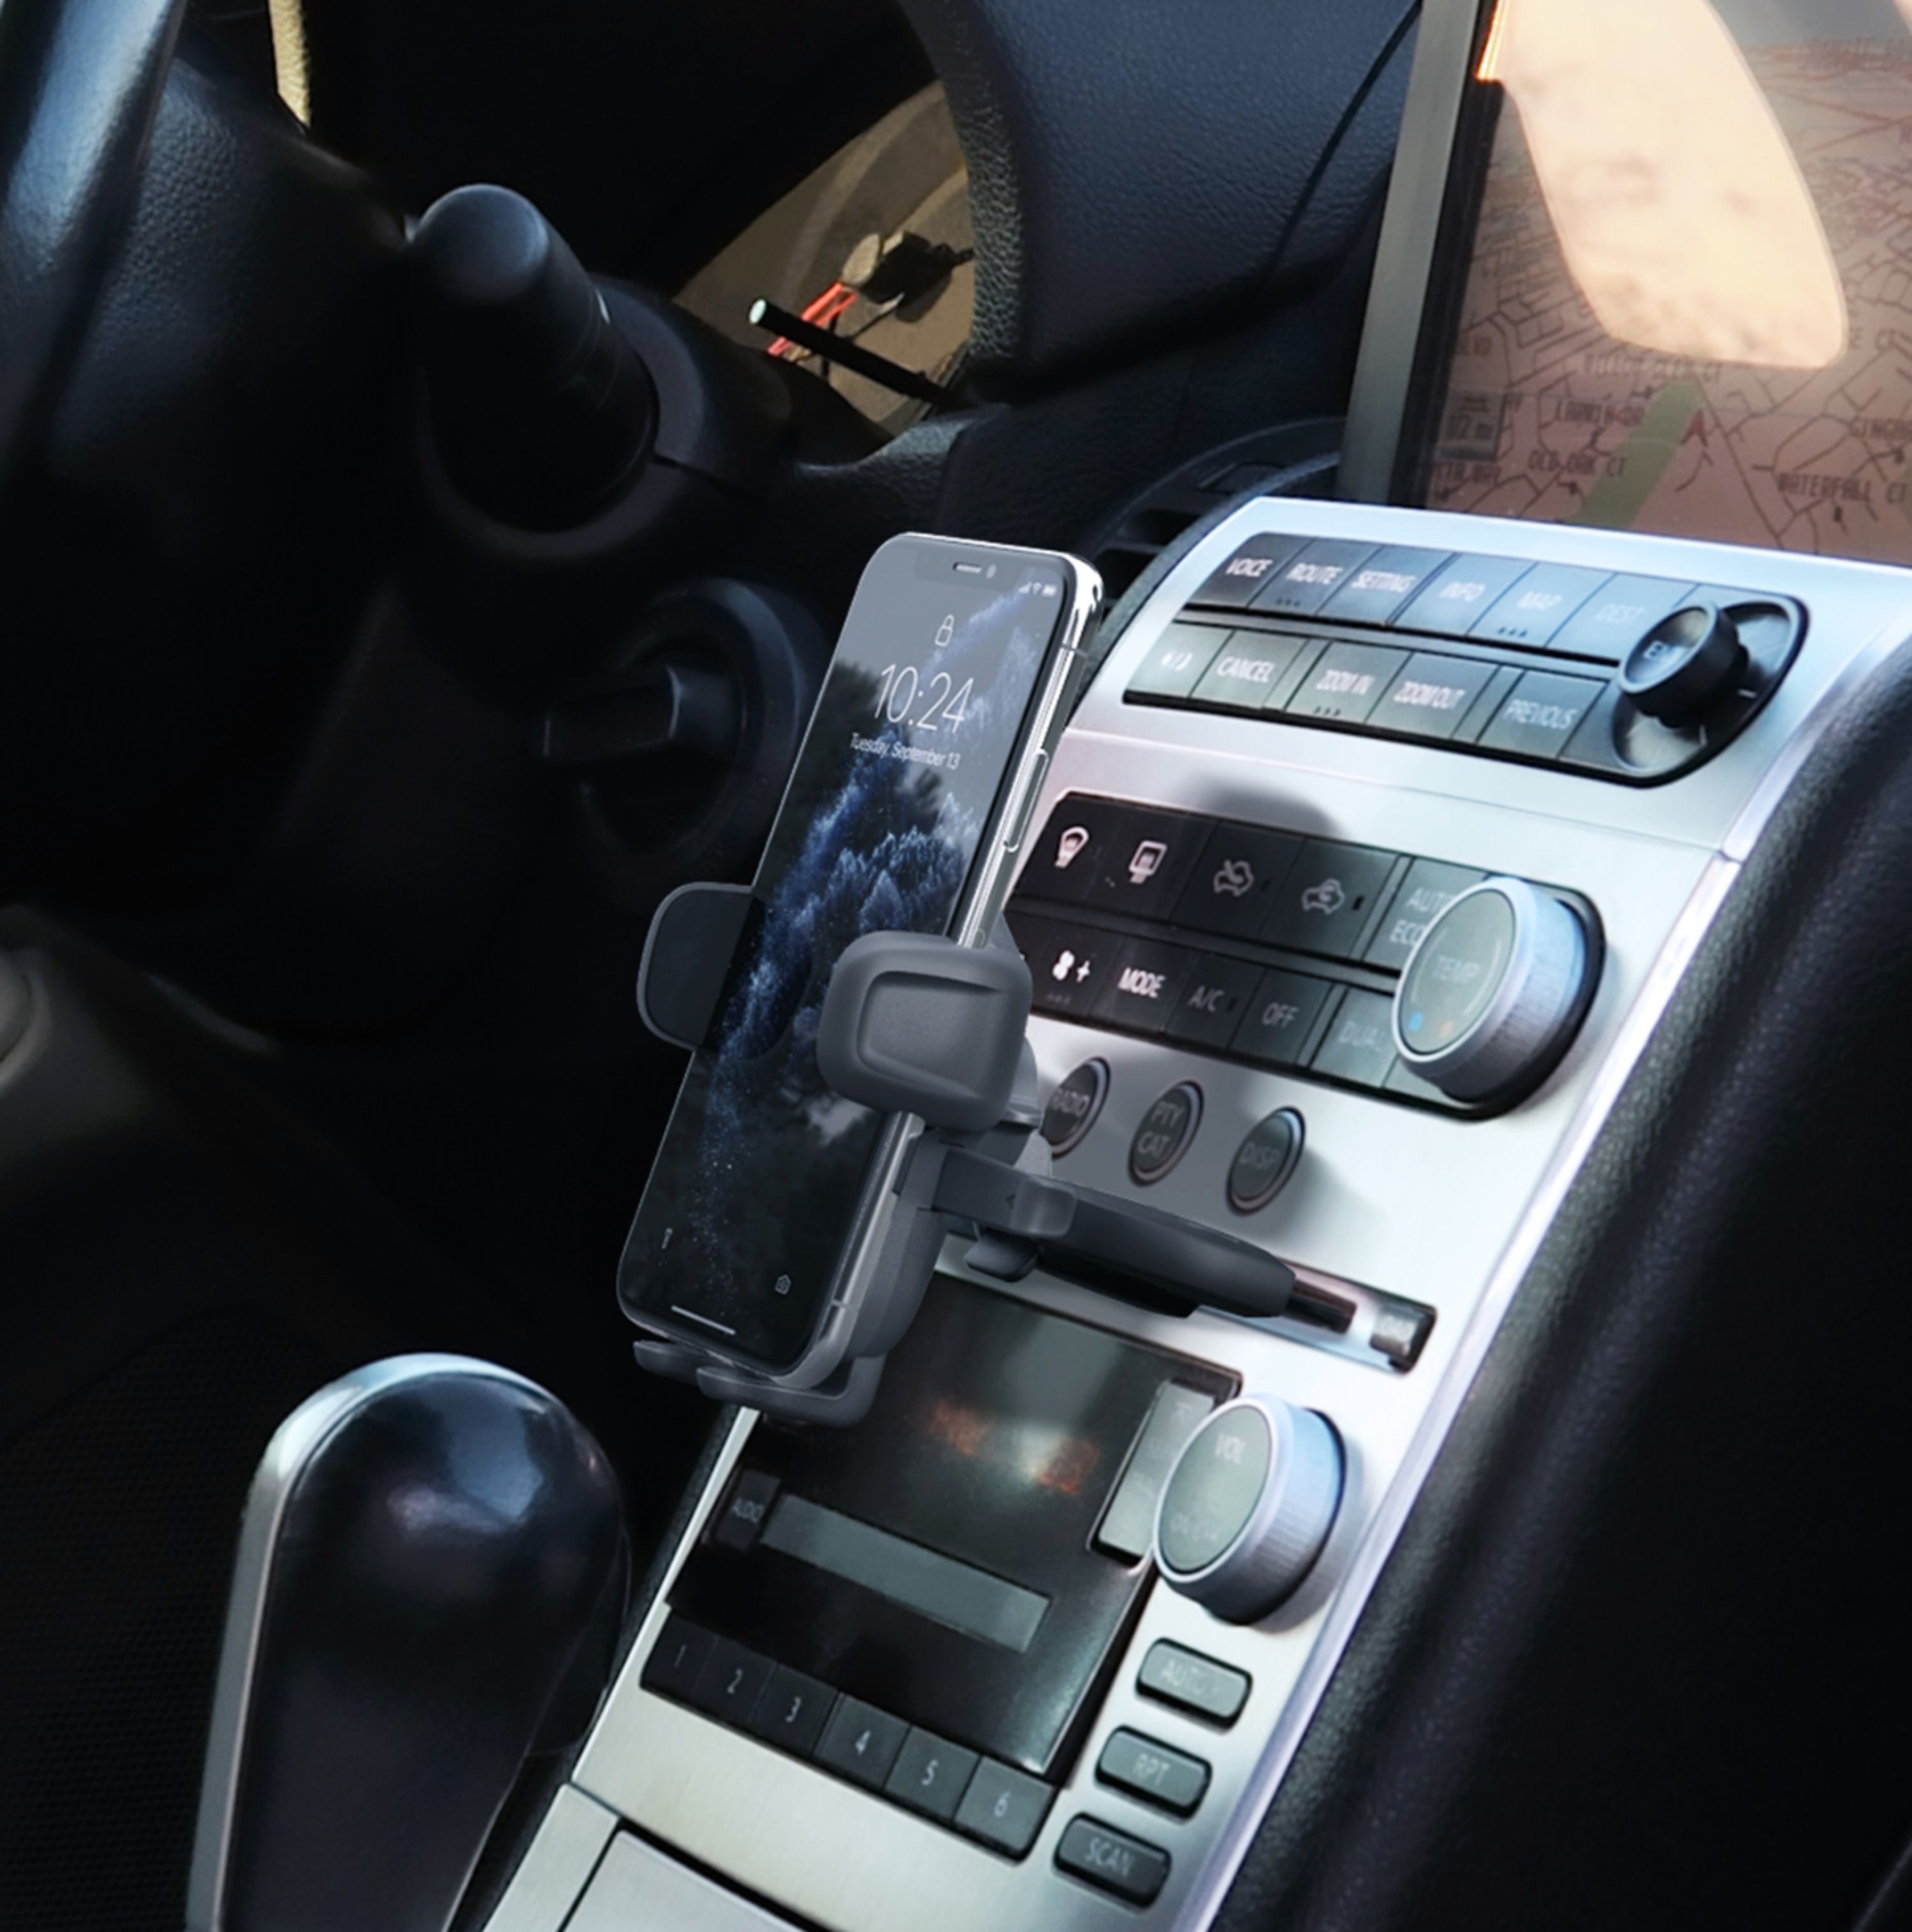 iOttie Auto Sense Adjustable Black Car Mount for Universal Cell Phones  HLCRIO164